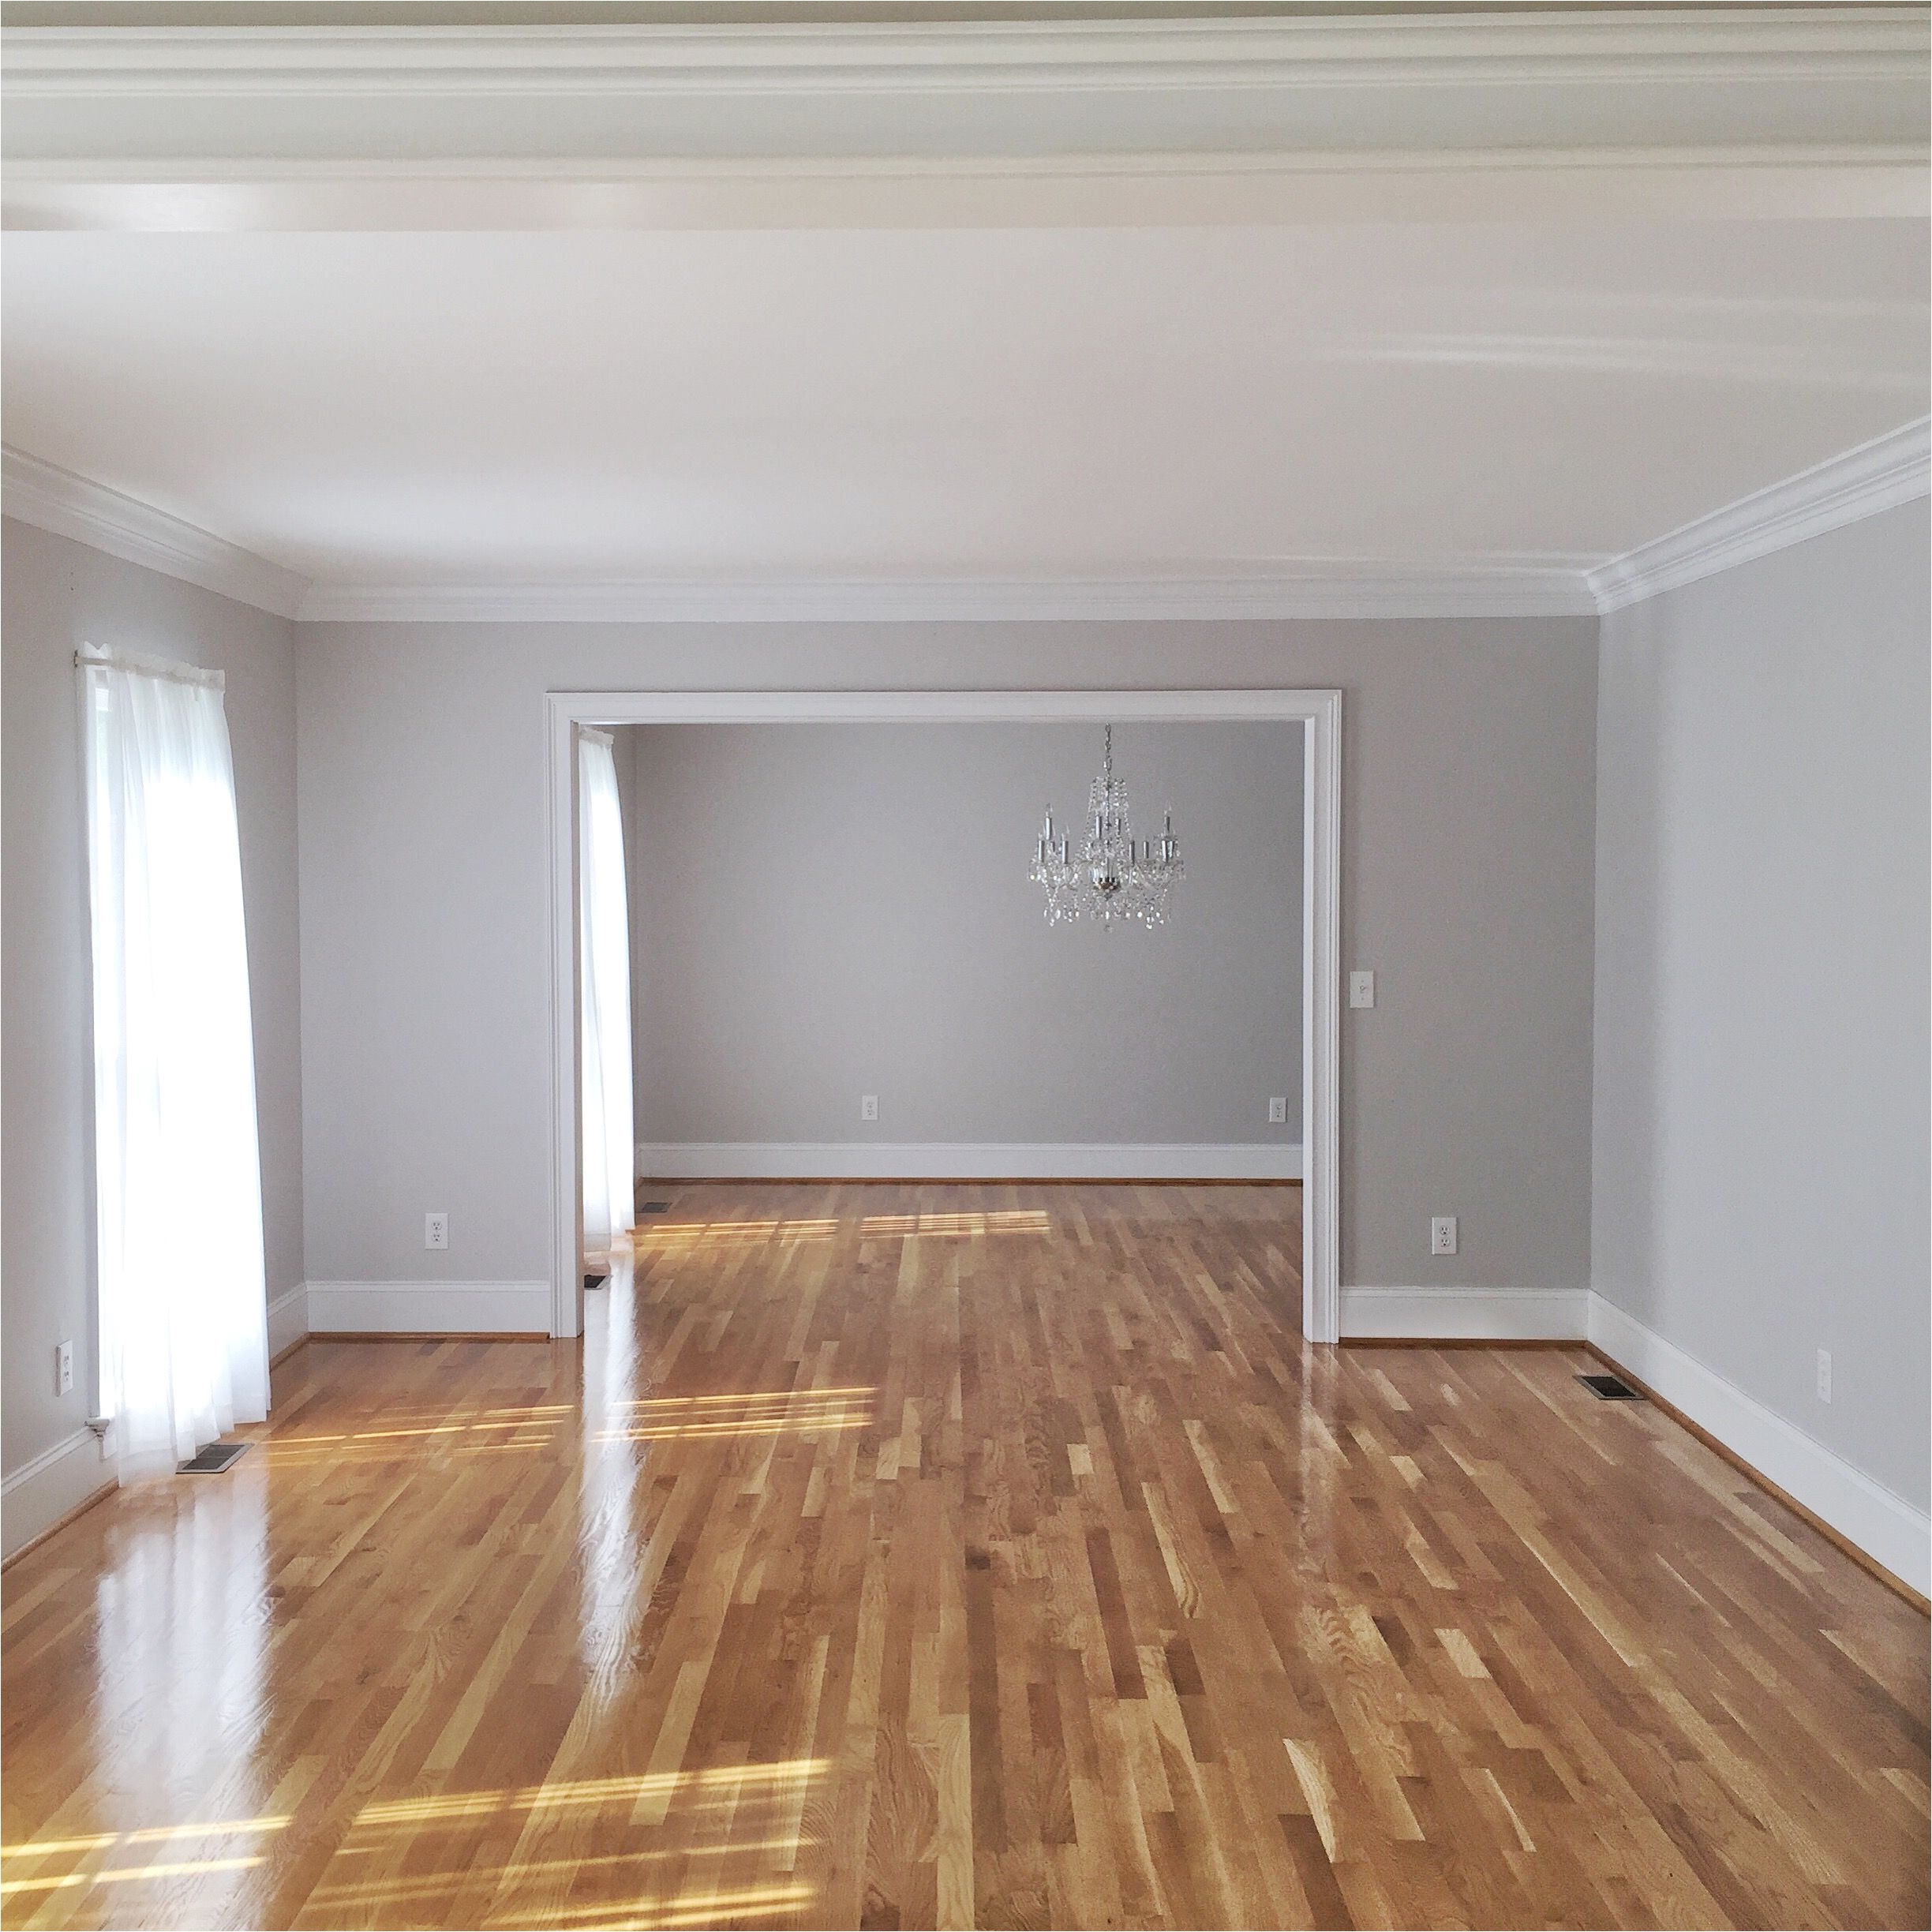 bethany mitchell homes hardwood floors natural light grey walls